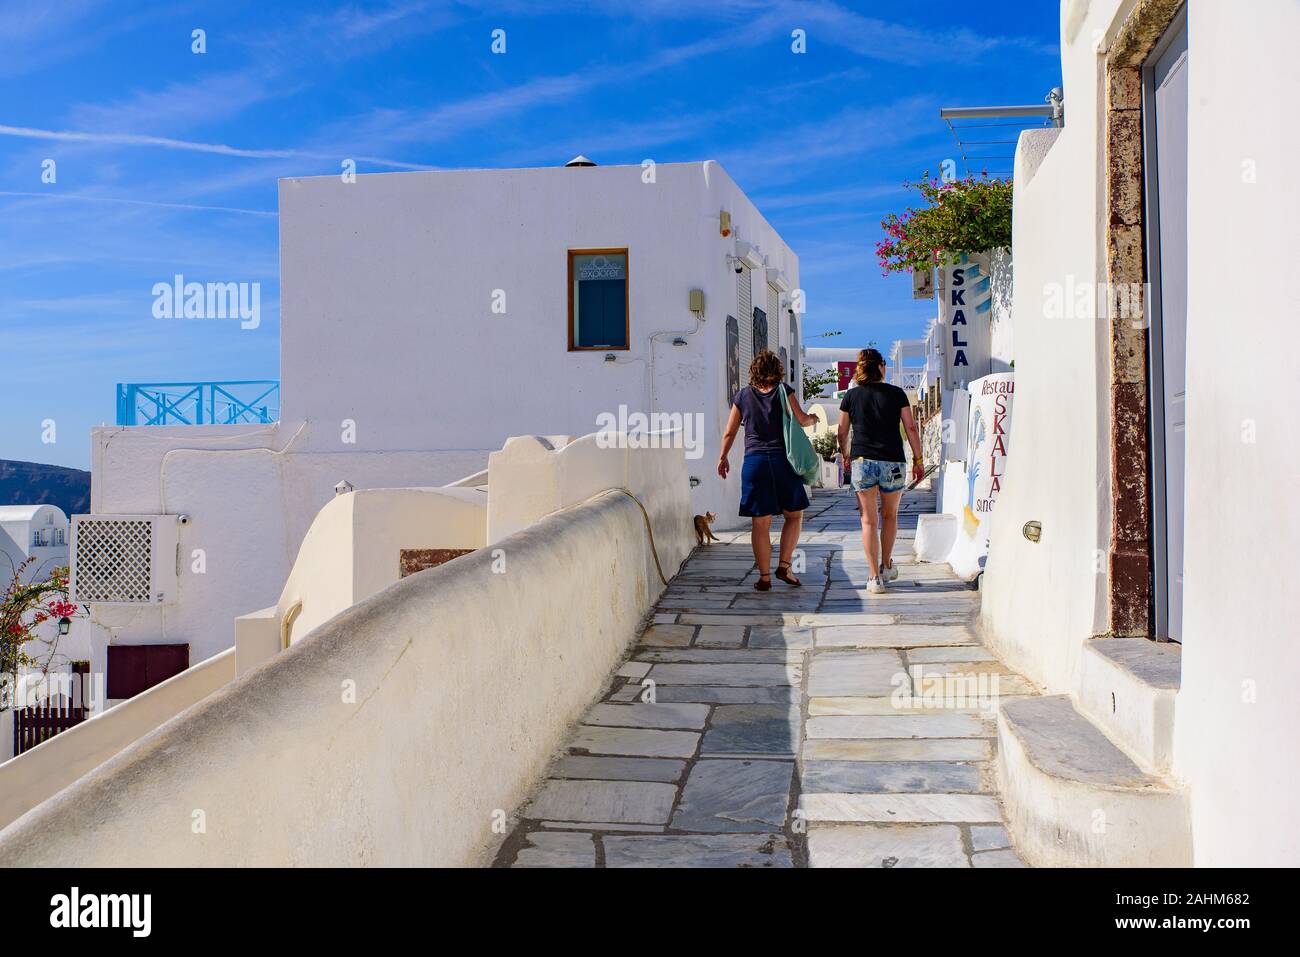 The main street with shops in Oia, Santorini, Greece Stock Photo